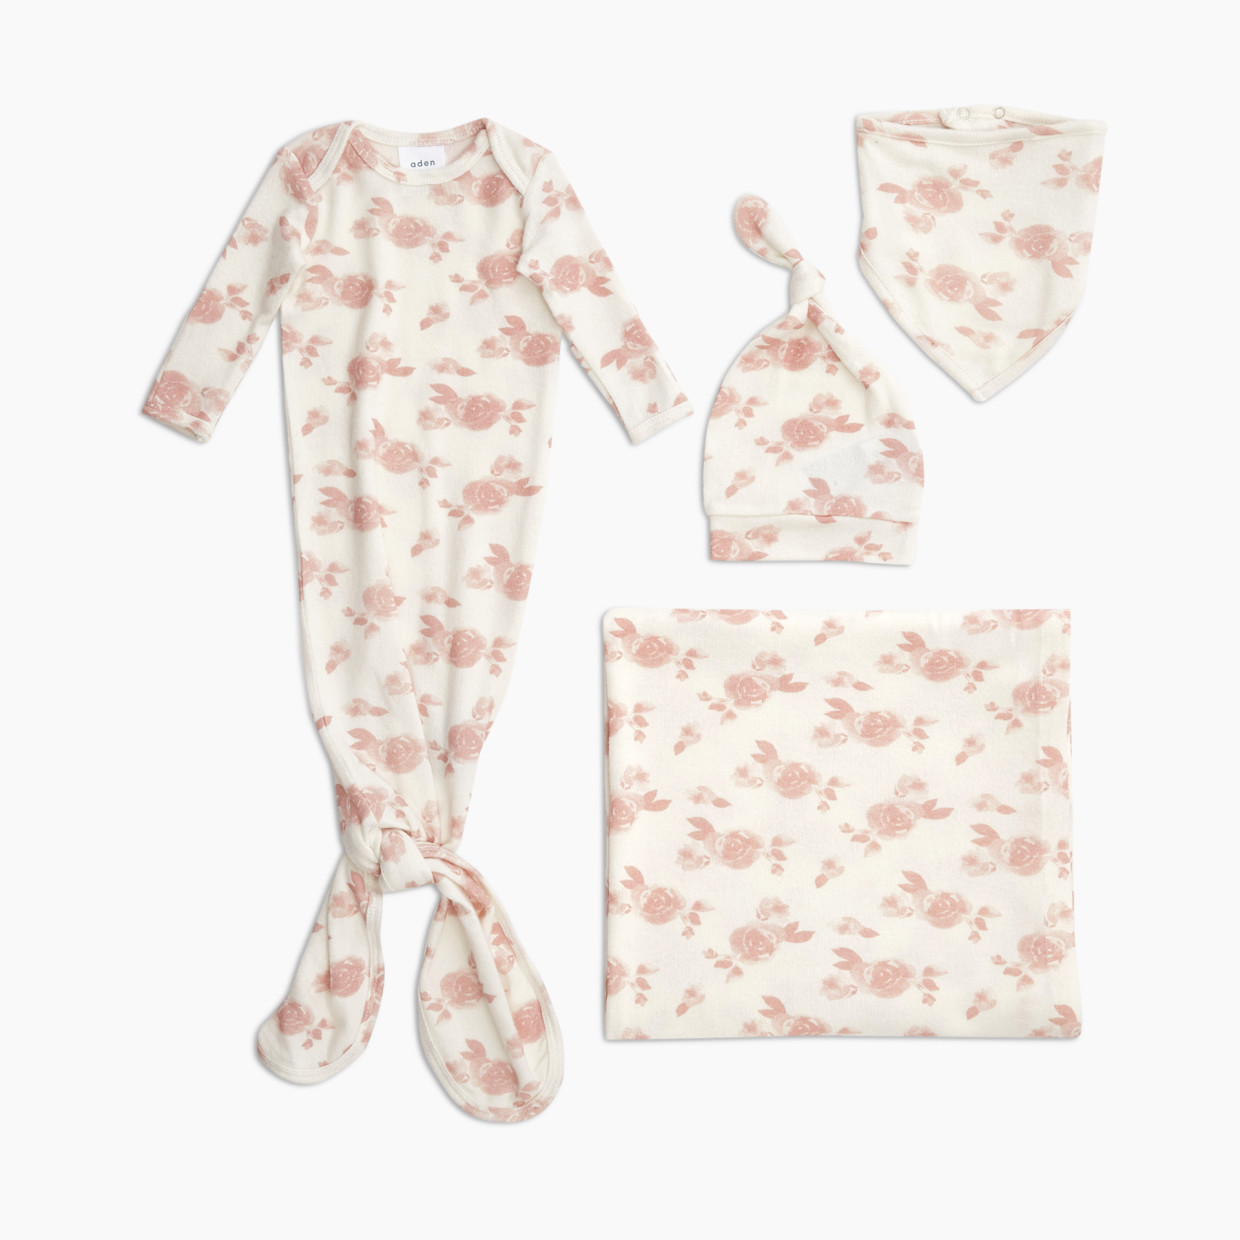 Aden + Anais Snuggle Knit Newborn Gift Set - Rosettes.